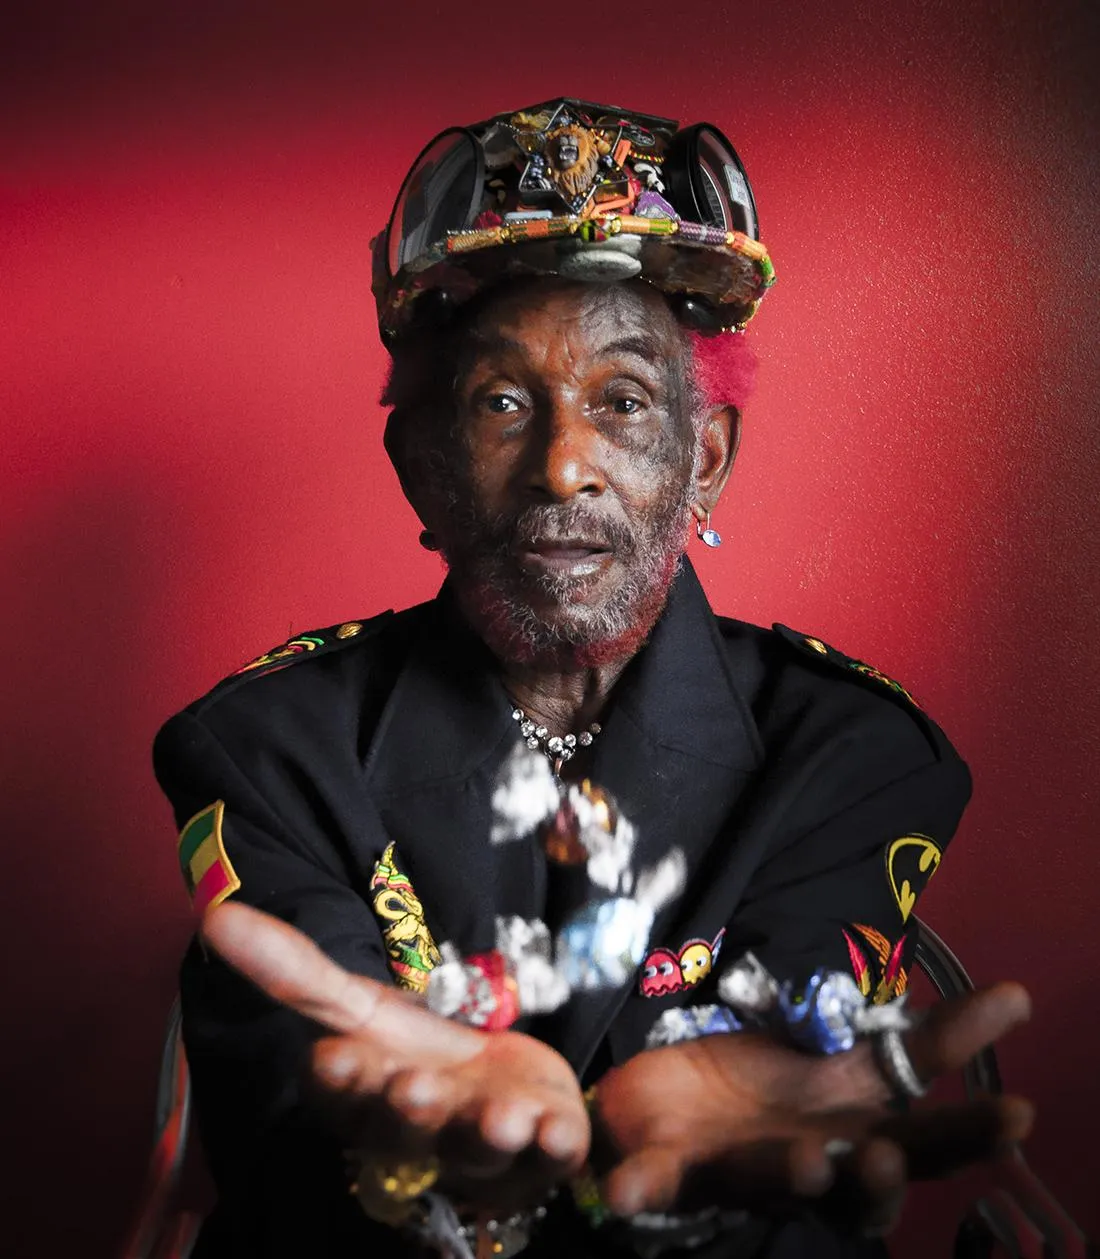 mort de la légende du reggae Lee "Scratch" Perry